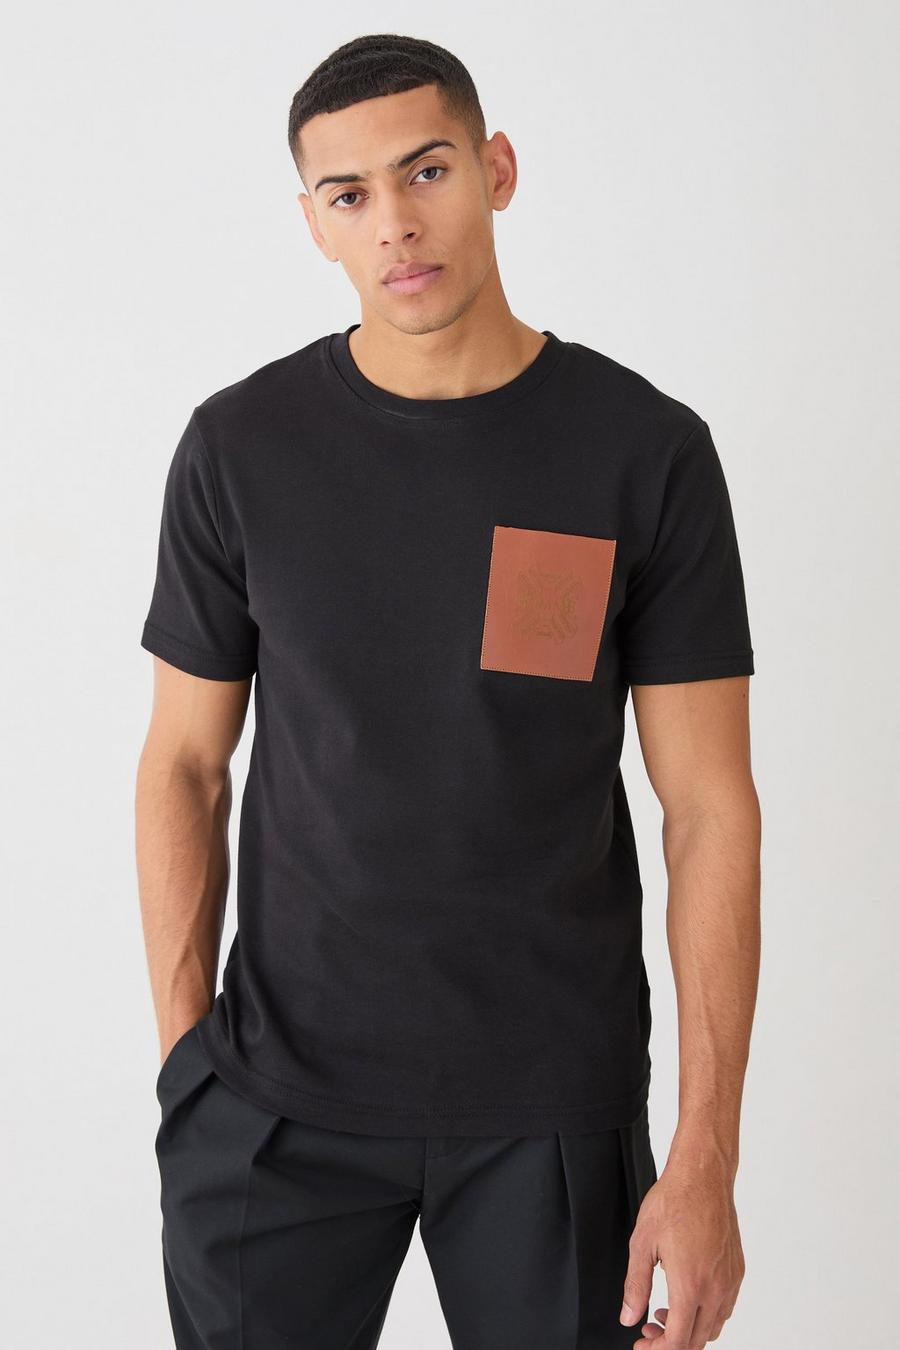 Camiseta con bolsillo de cuero sintético, Black